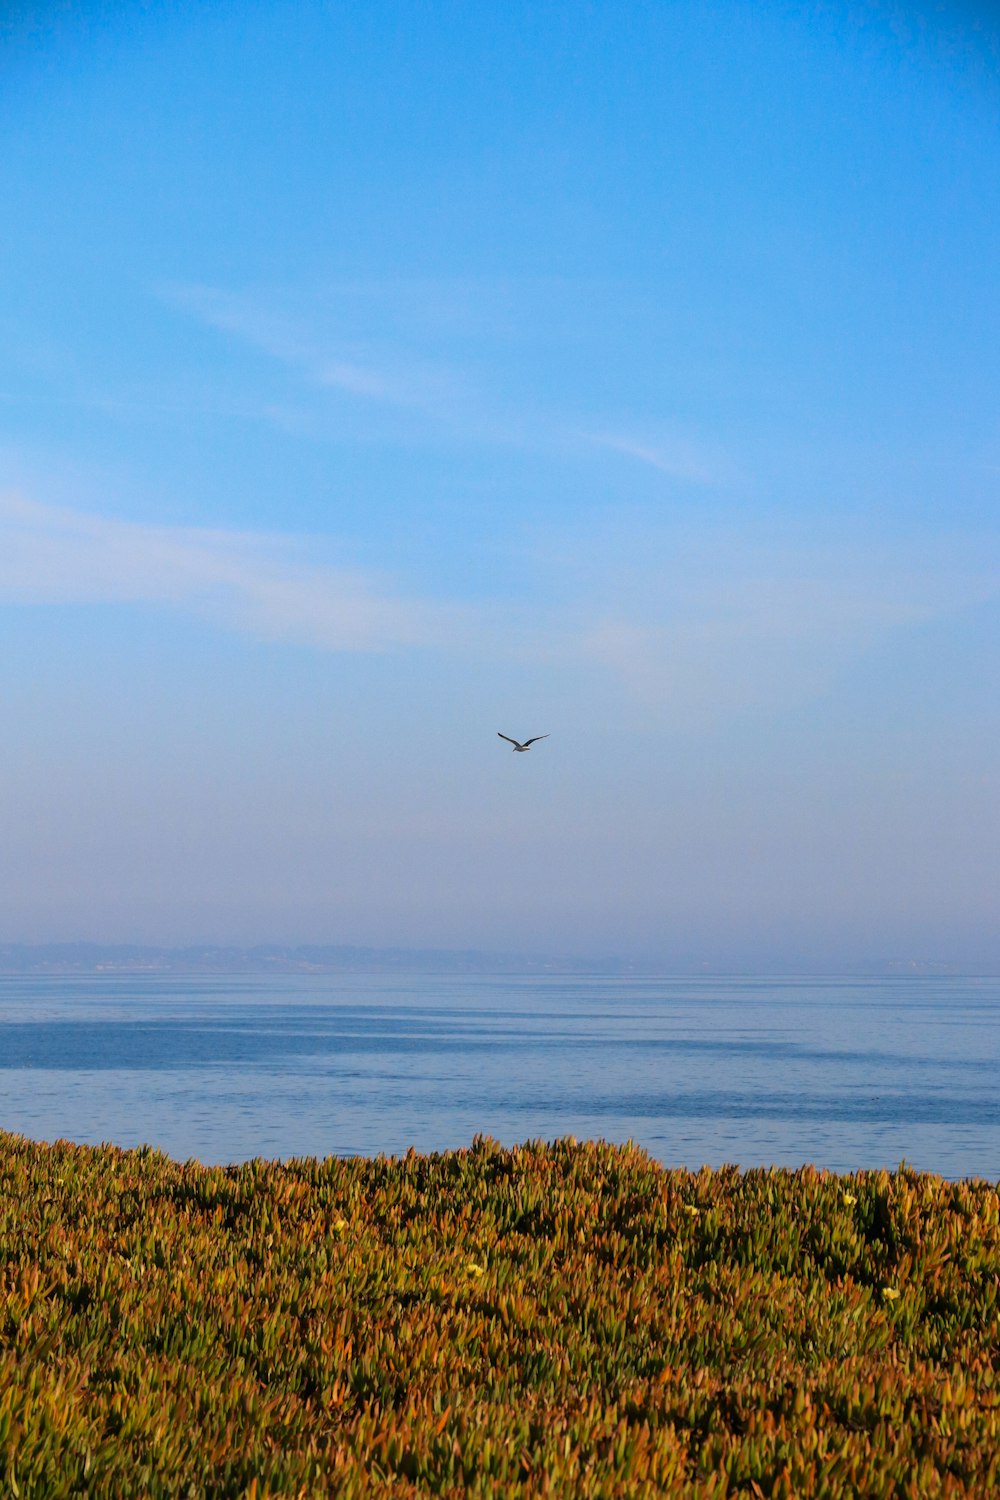 a bird flying over the ocean on a sunny day